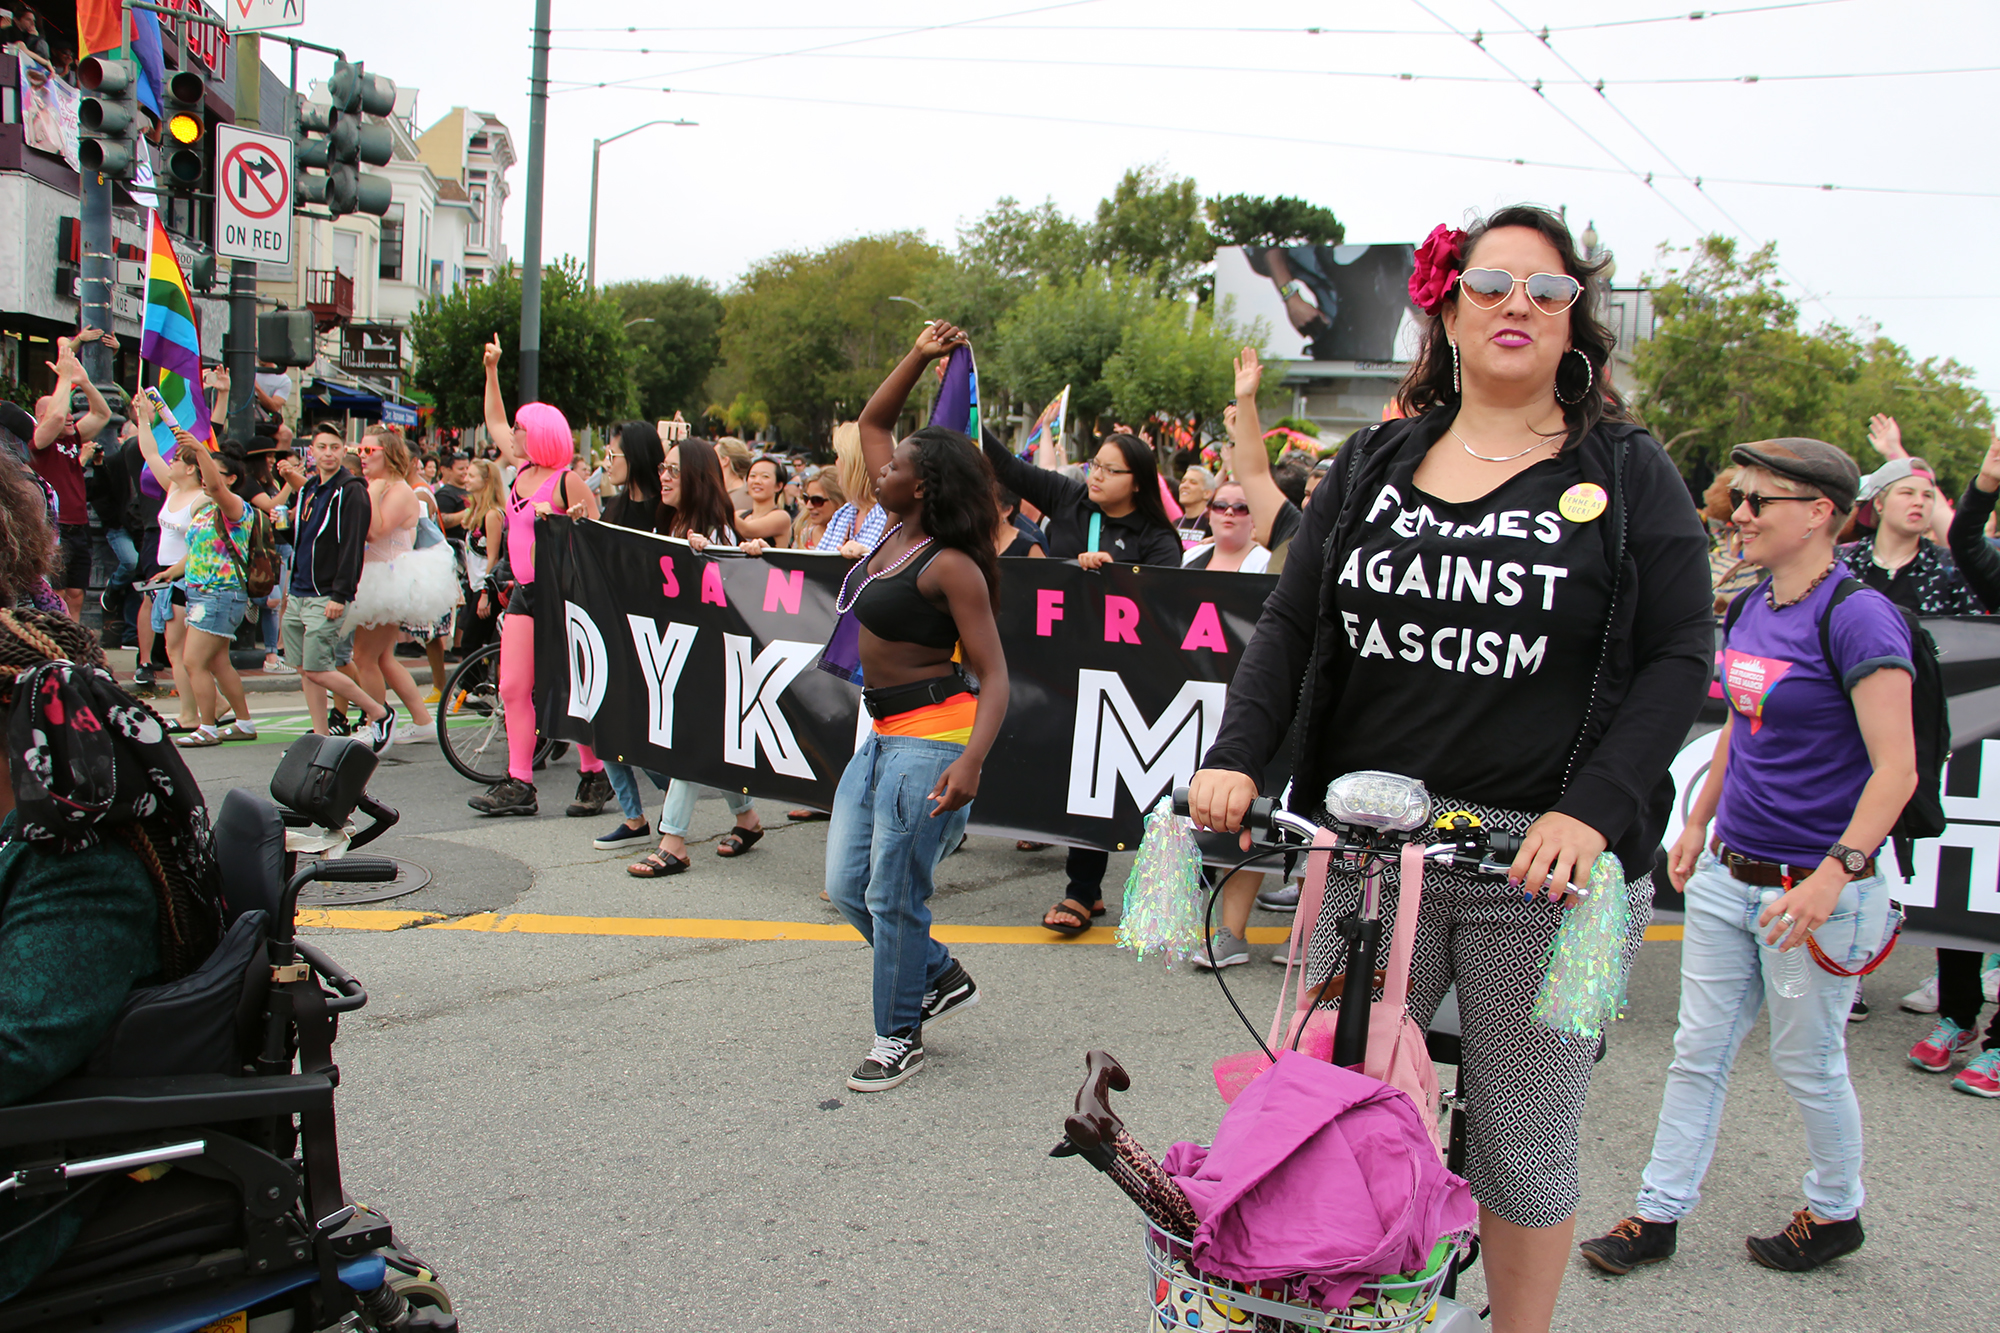 Femmes Against Fascism